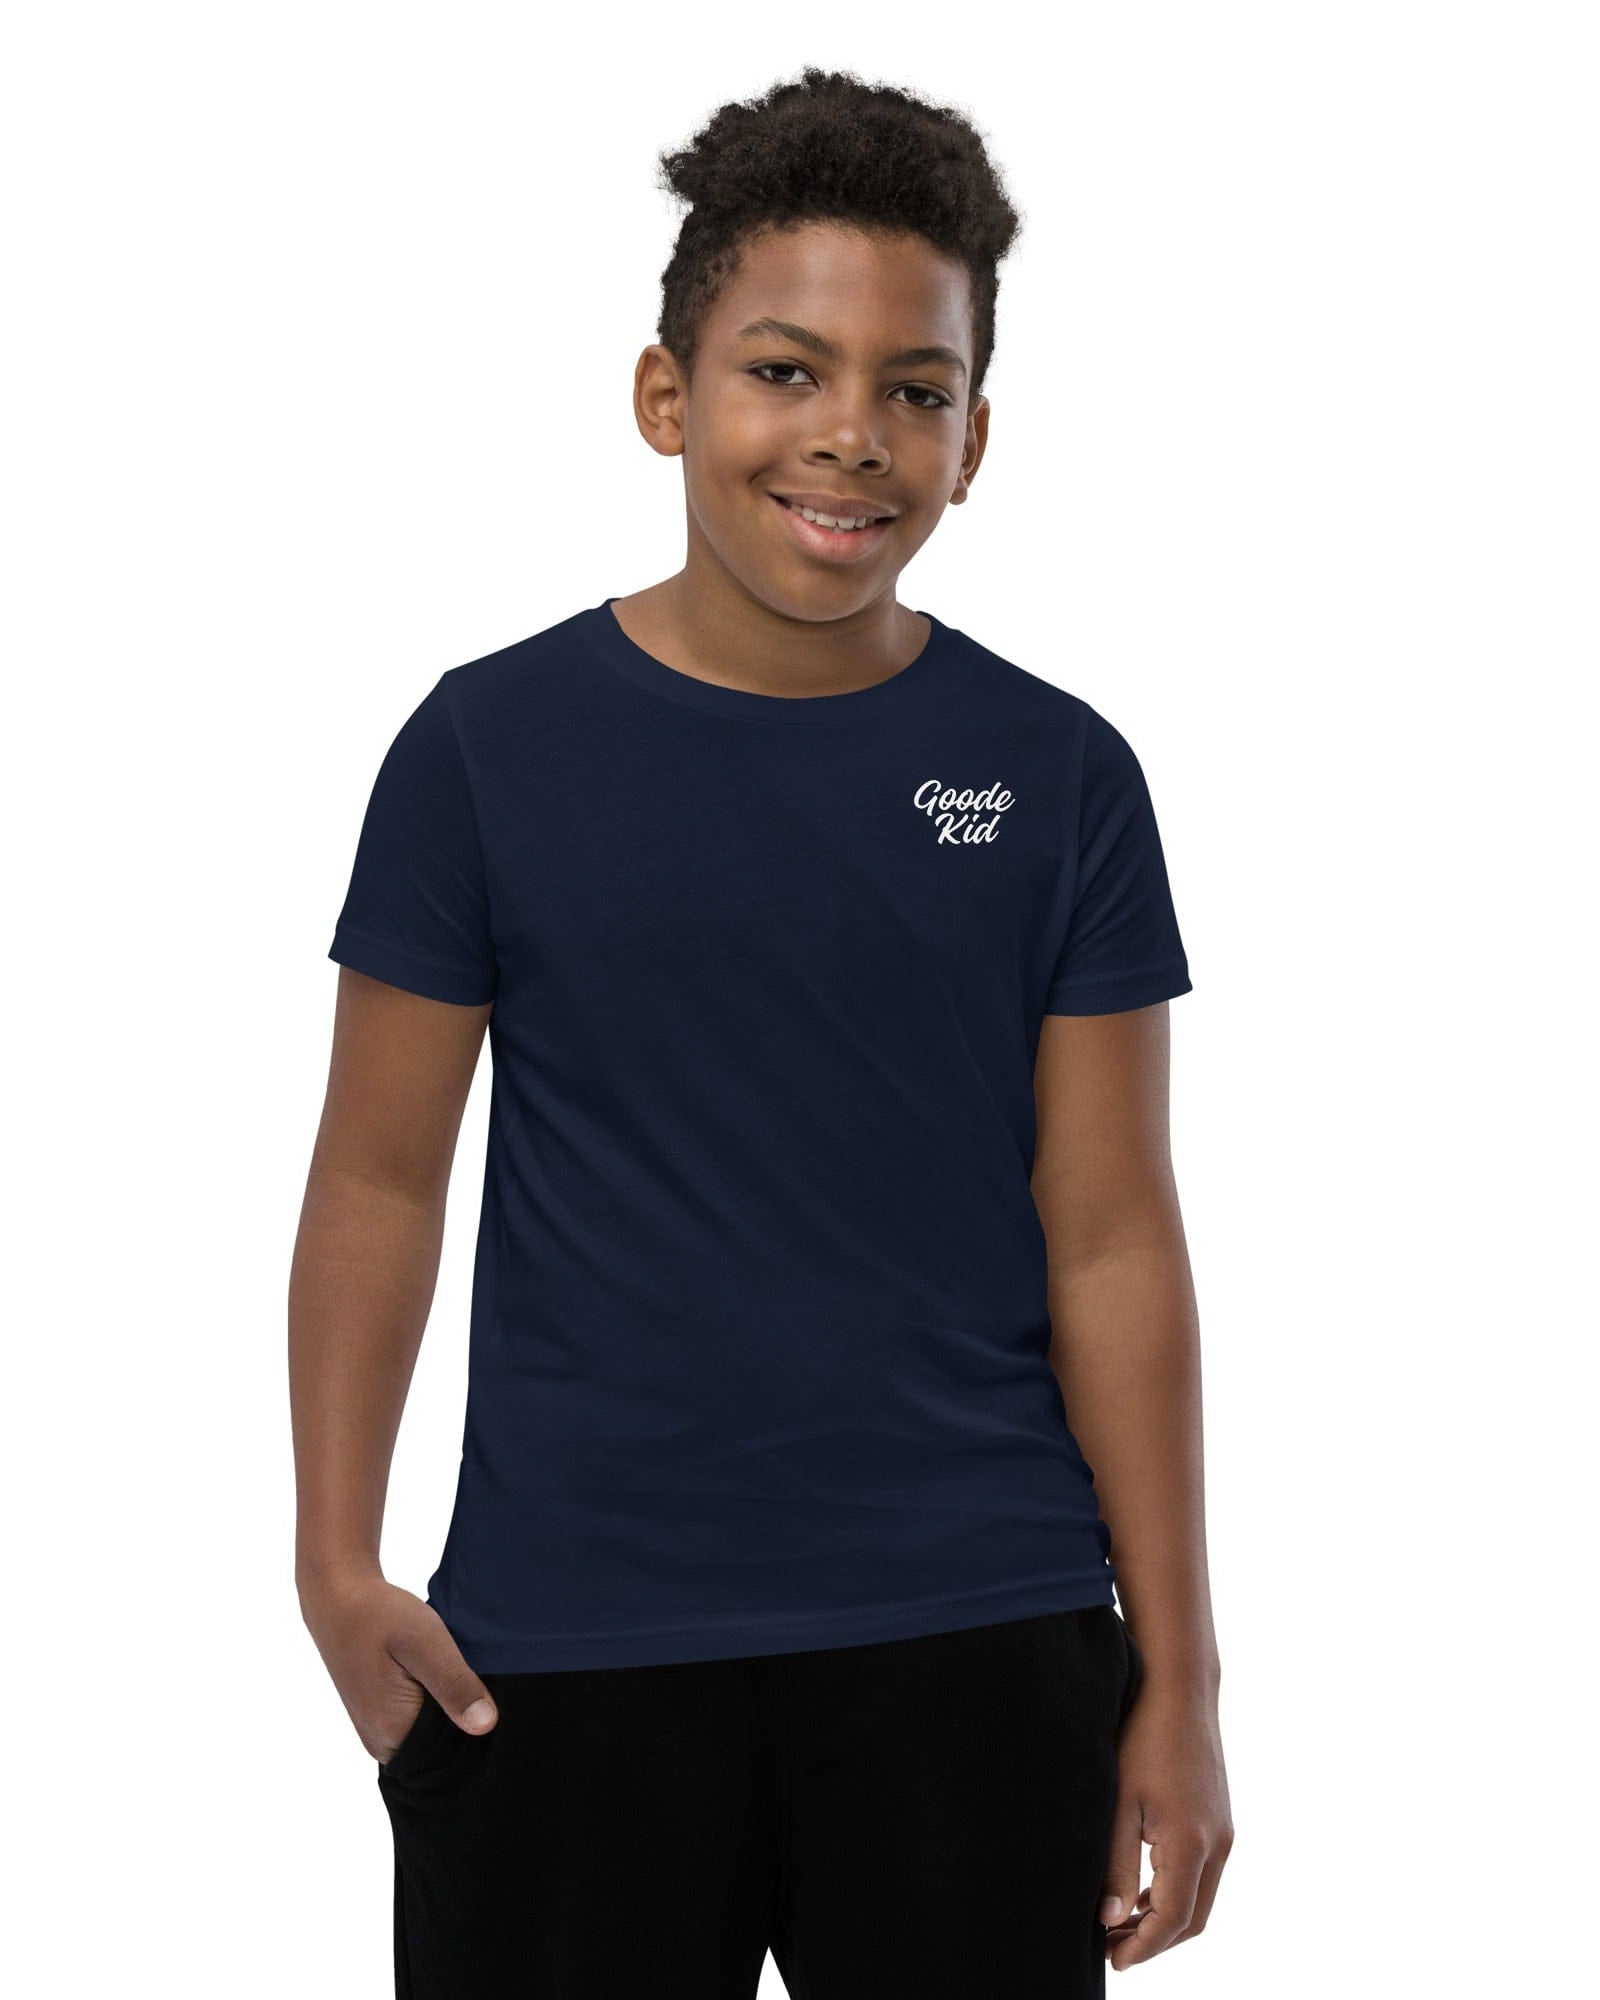 Goode Kid T-shirt | Youth Navy / S kids t-shirts Jolly & Goode